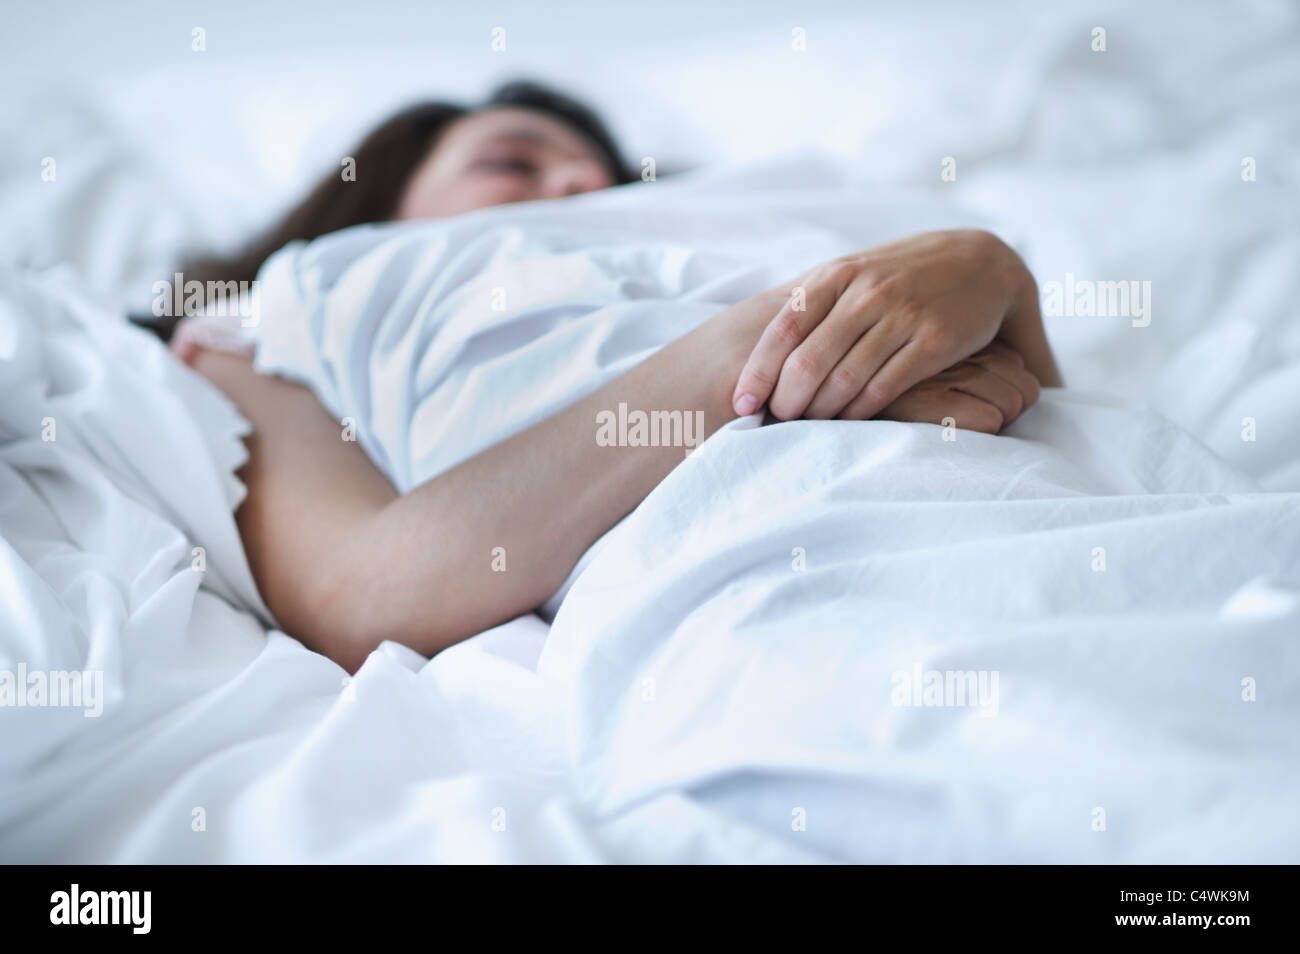 USA, New Jersey, Jersey City, junge Frau im Bett Tagträumen Stockfoto